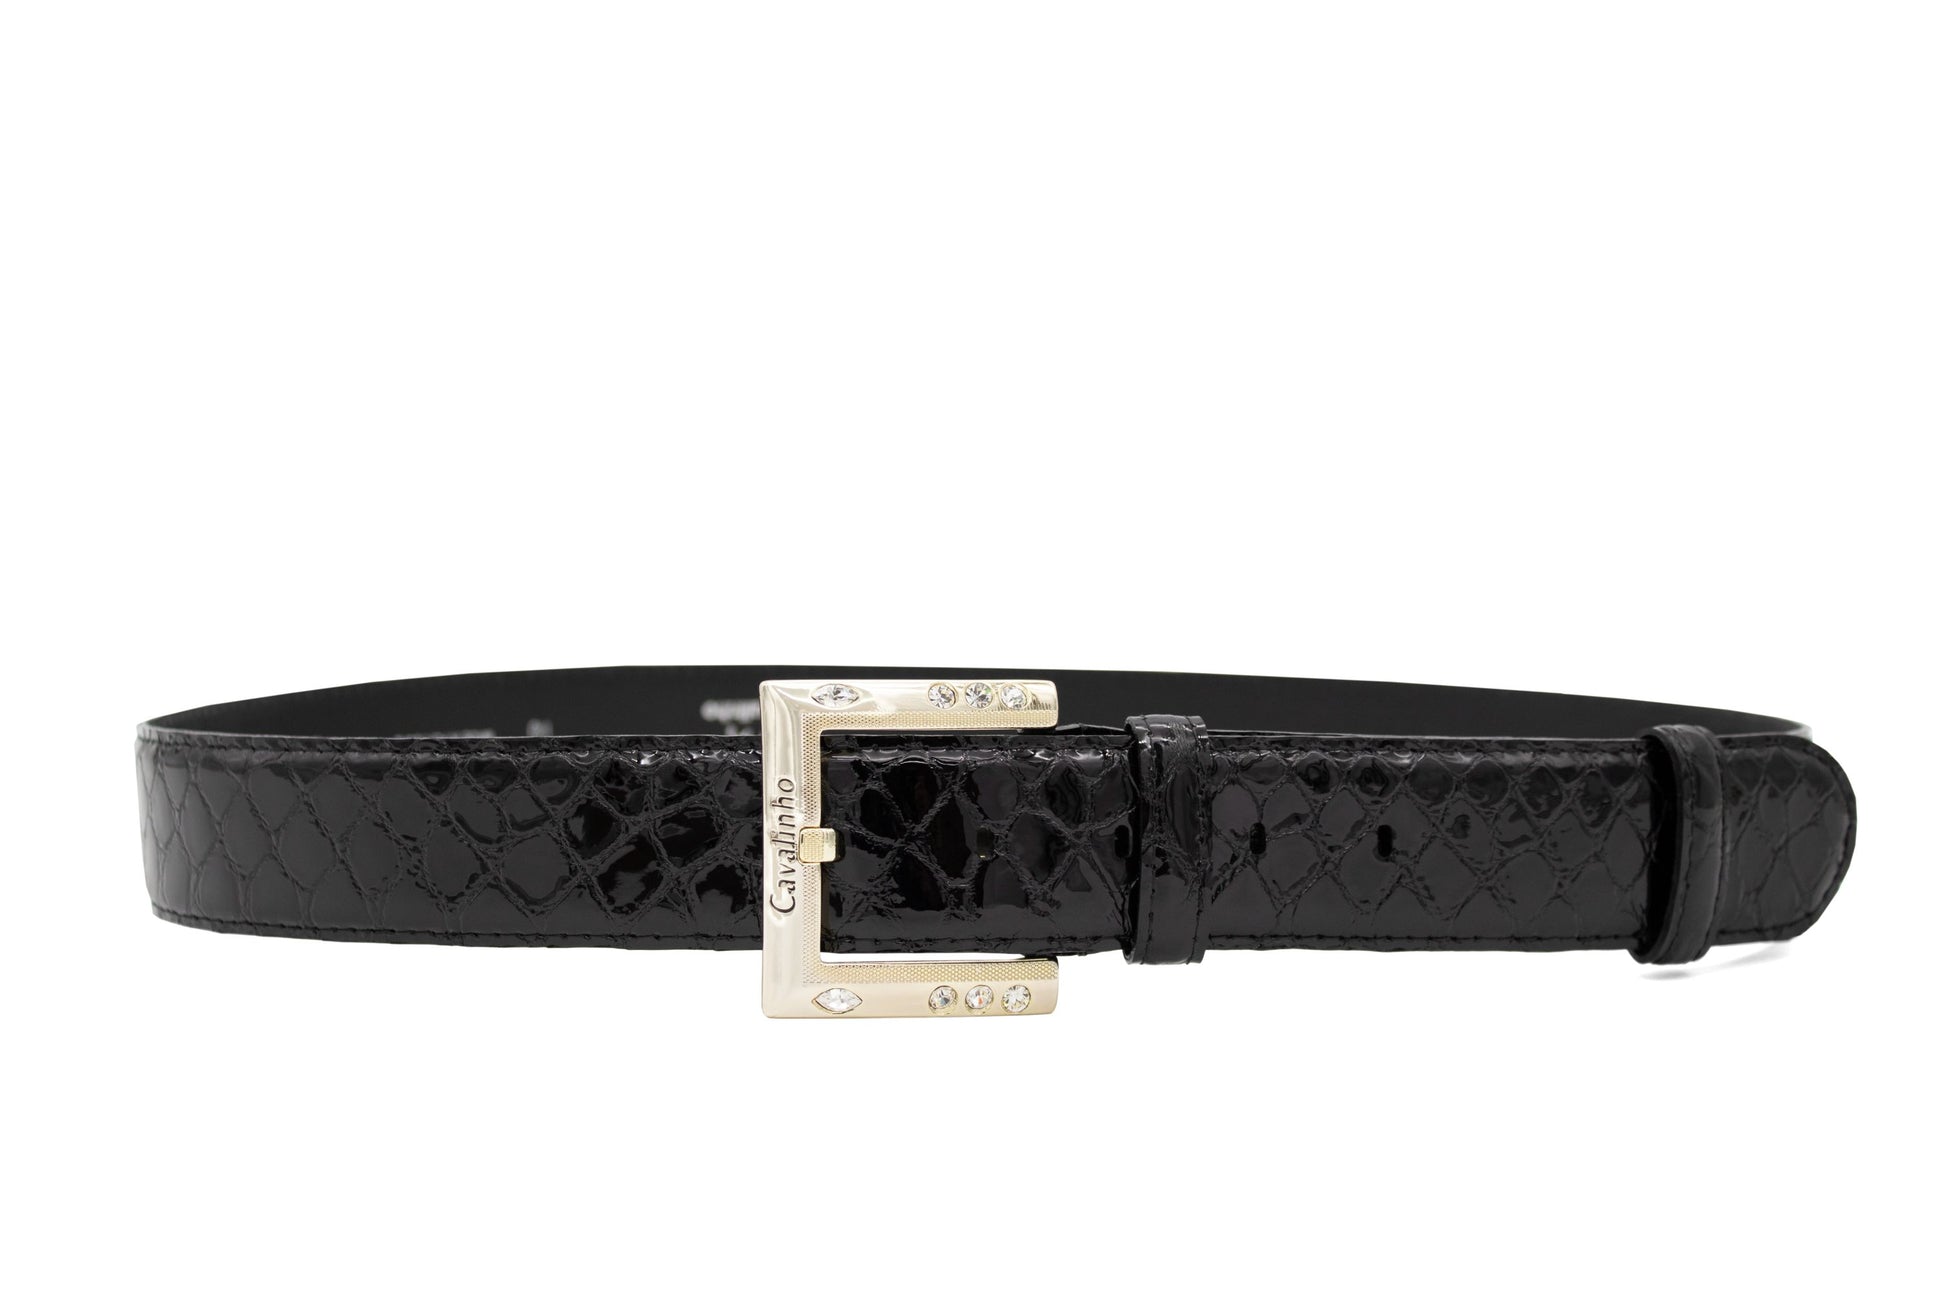 Cavalinho Galope Patent Leather Belt - Black Gold - 58010810.01_1